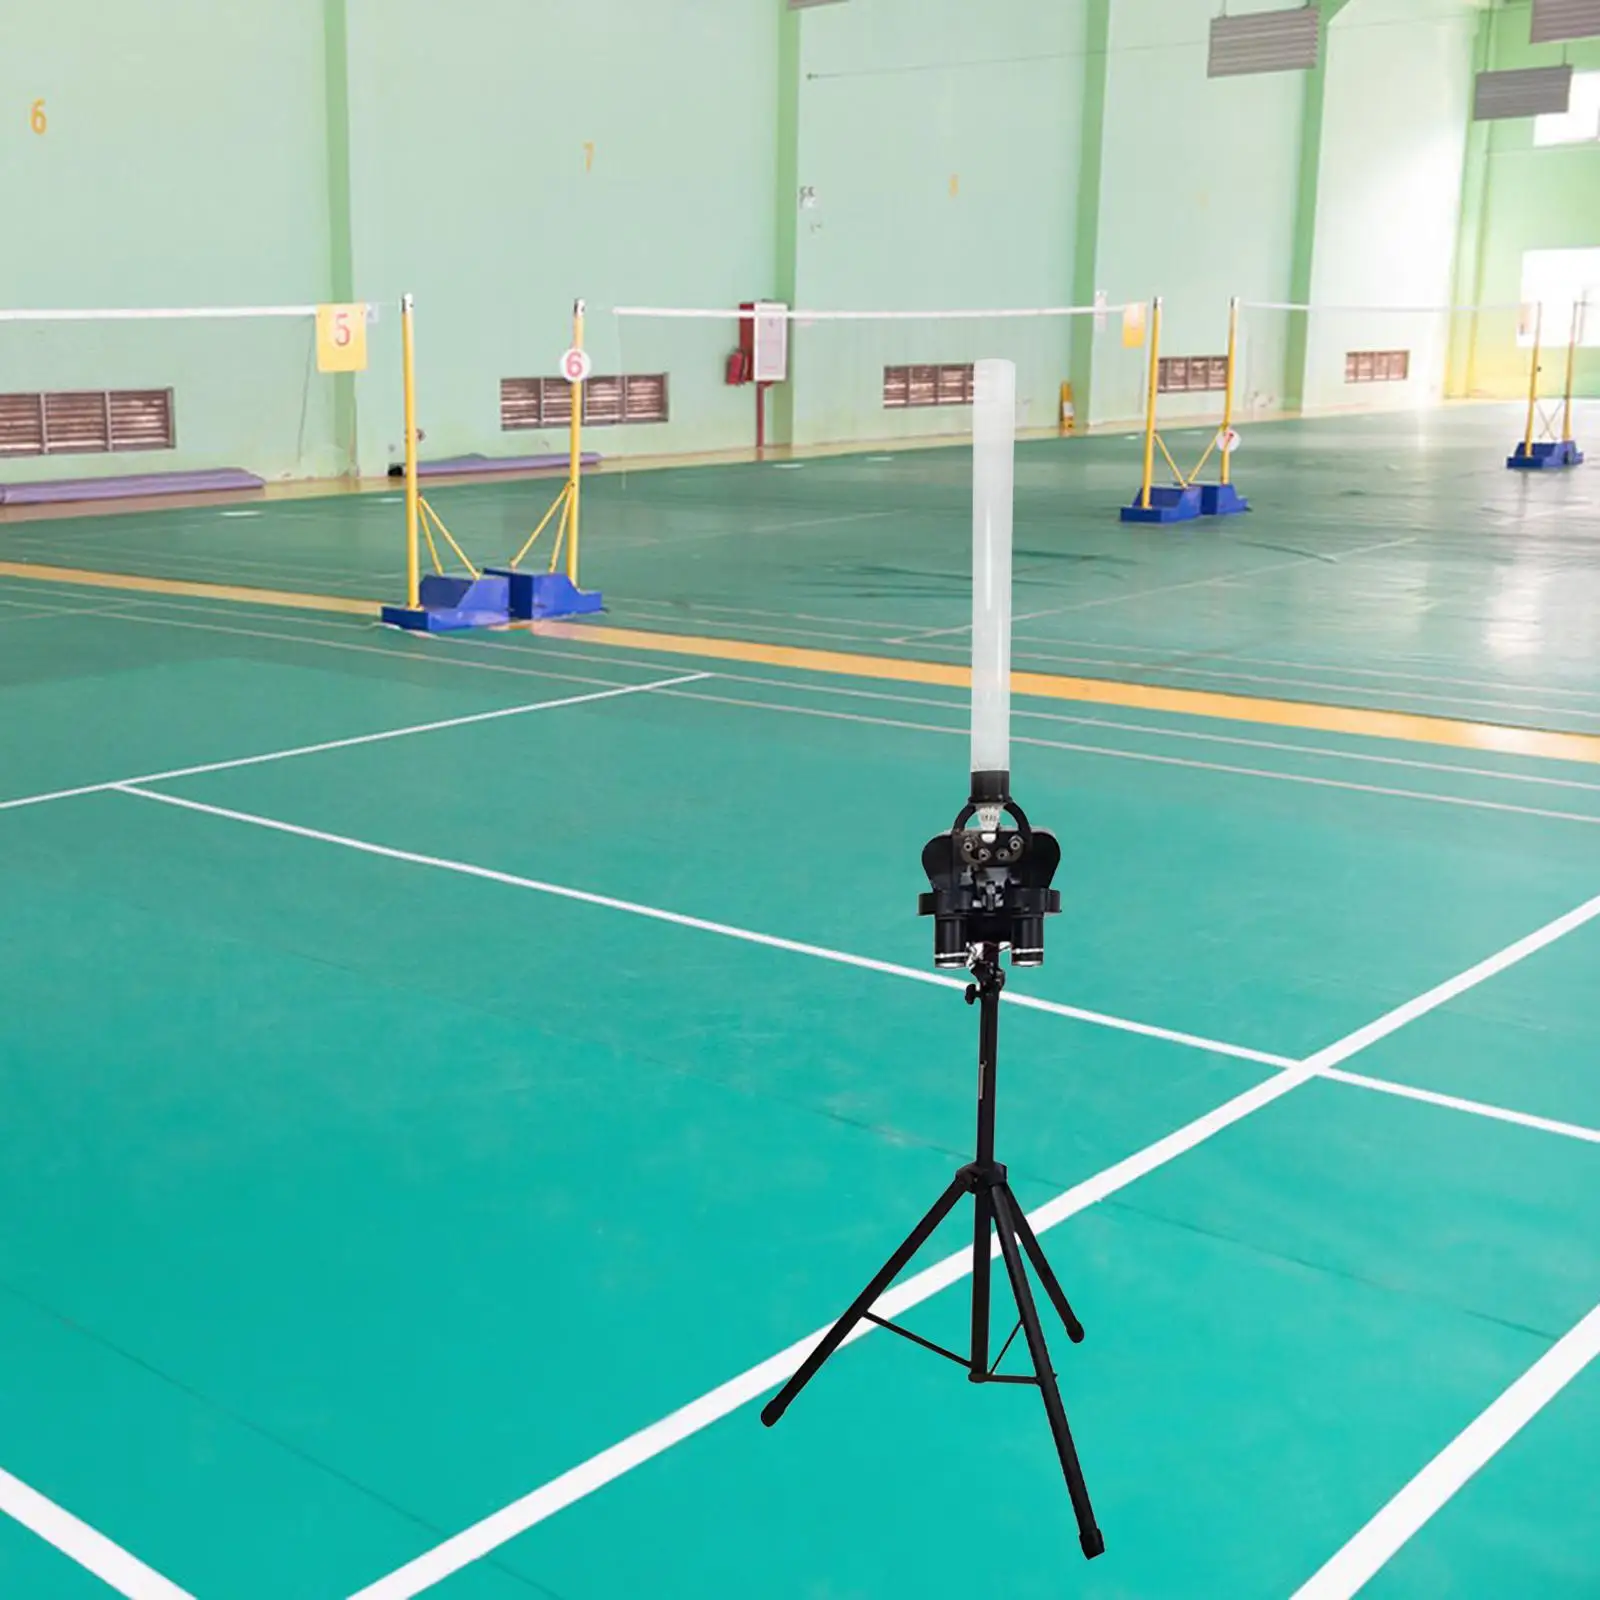 Automatic Badminton Serve Machine Automatic Badminton Launcher Professional Sport Game for Adults Coaches Sports Toys Equipment